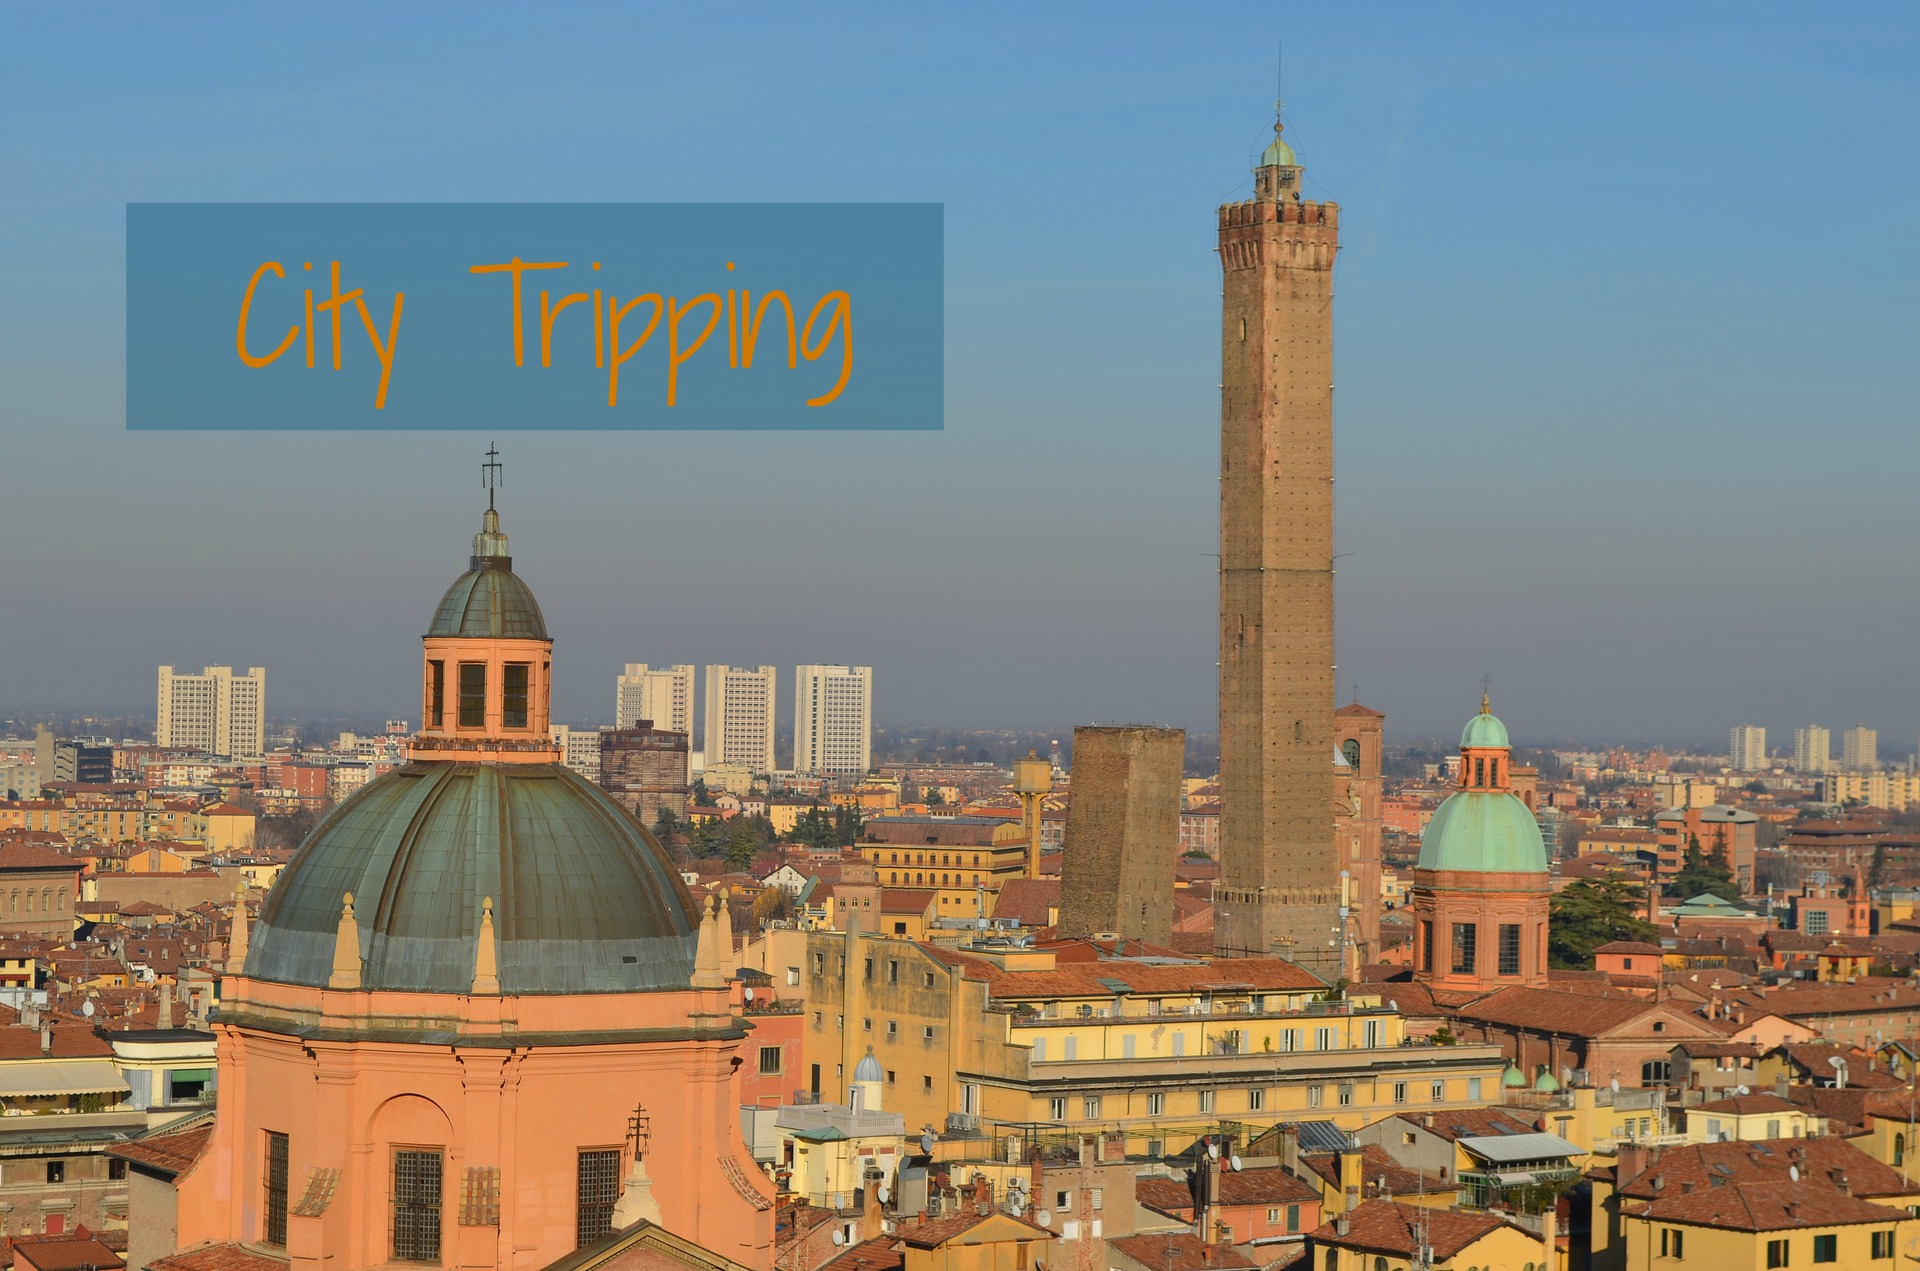 Bologna - City Tripping